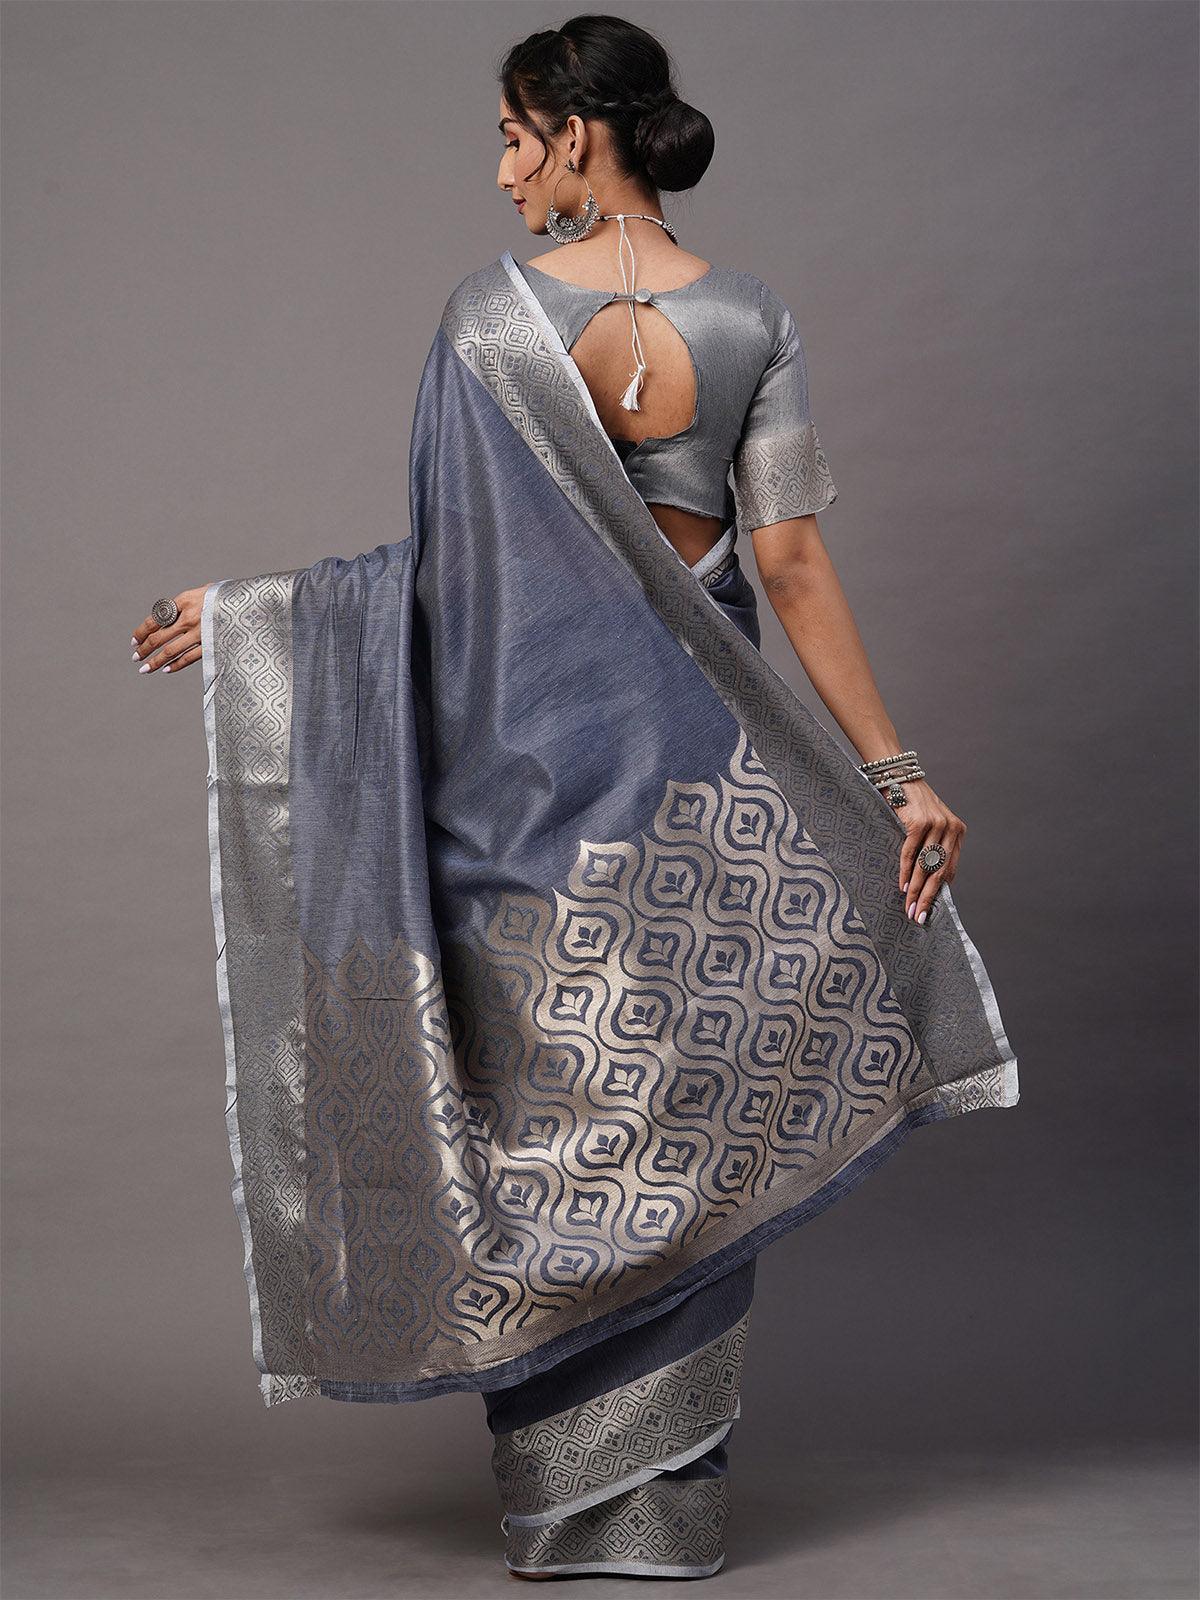 Women's Linen Blend Blue Woven Design Celebrity Saree With Blouse Piece - Odette